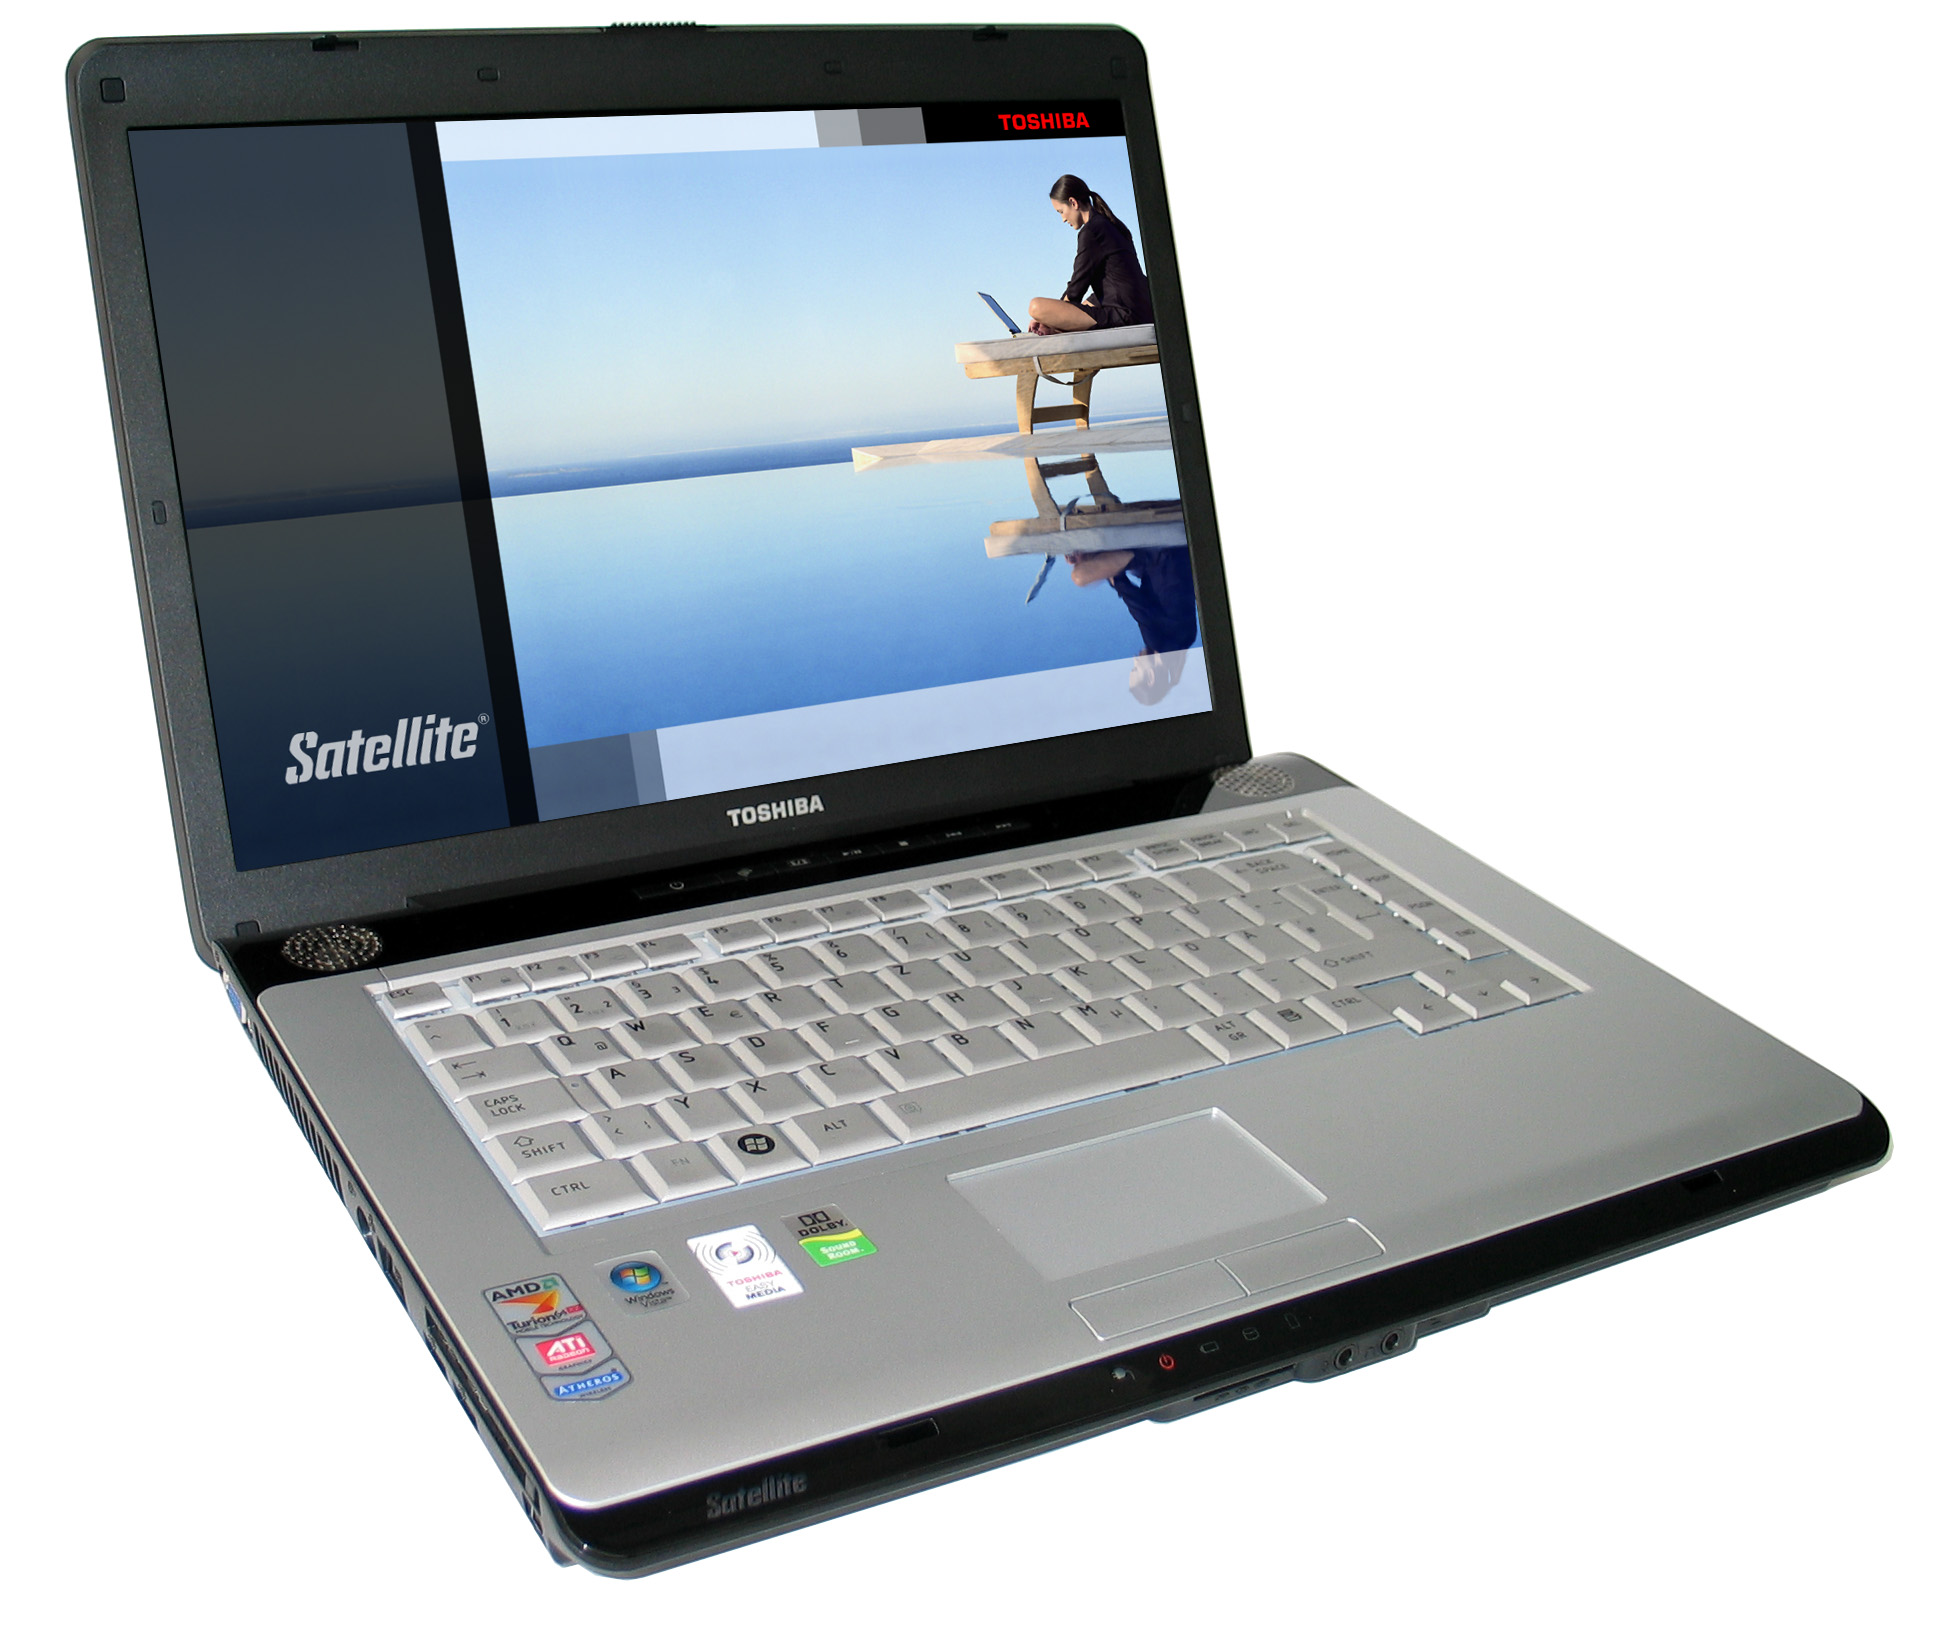 Toshiba Satellite A210-12Z - Notebookcheck.net External Reviews